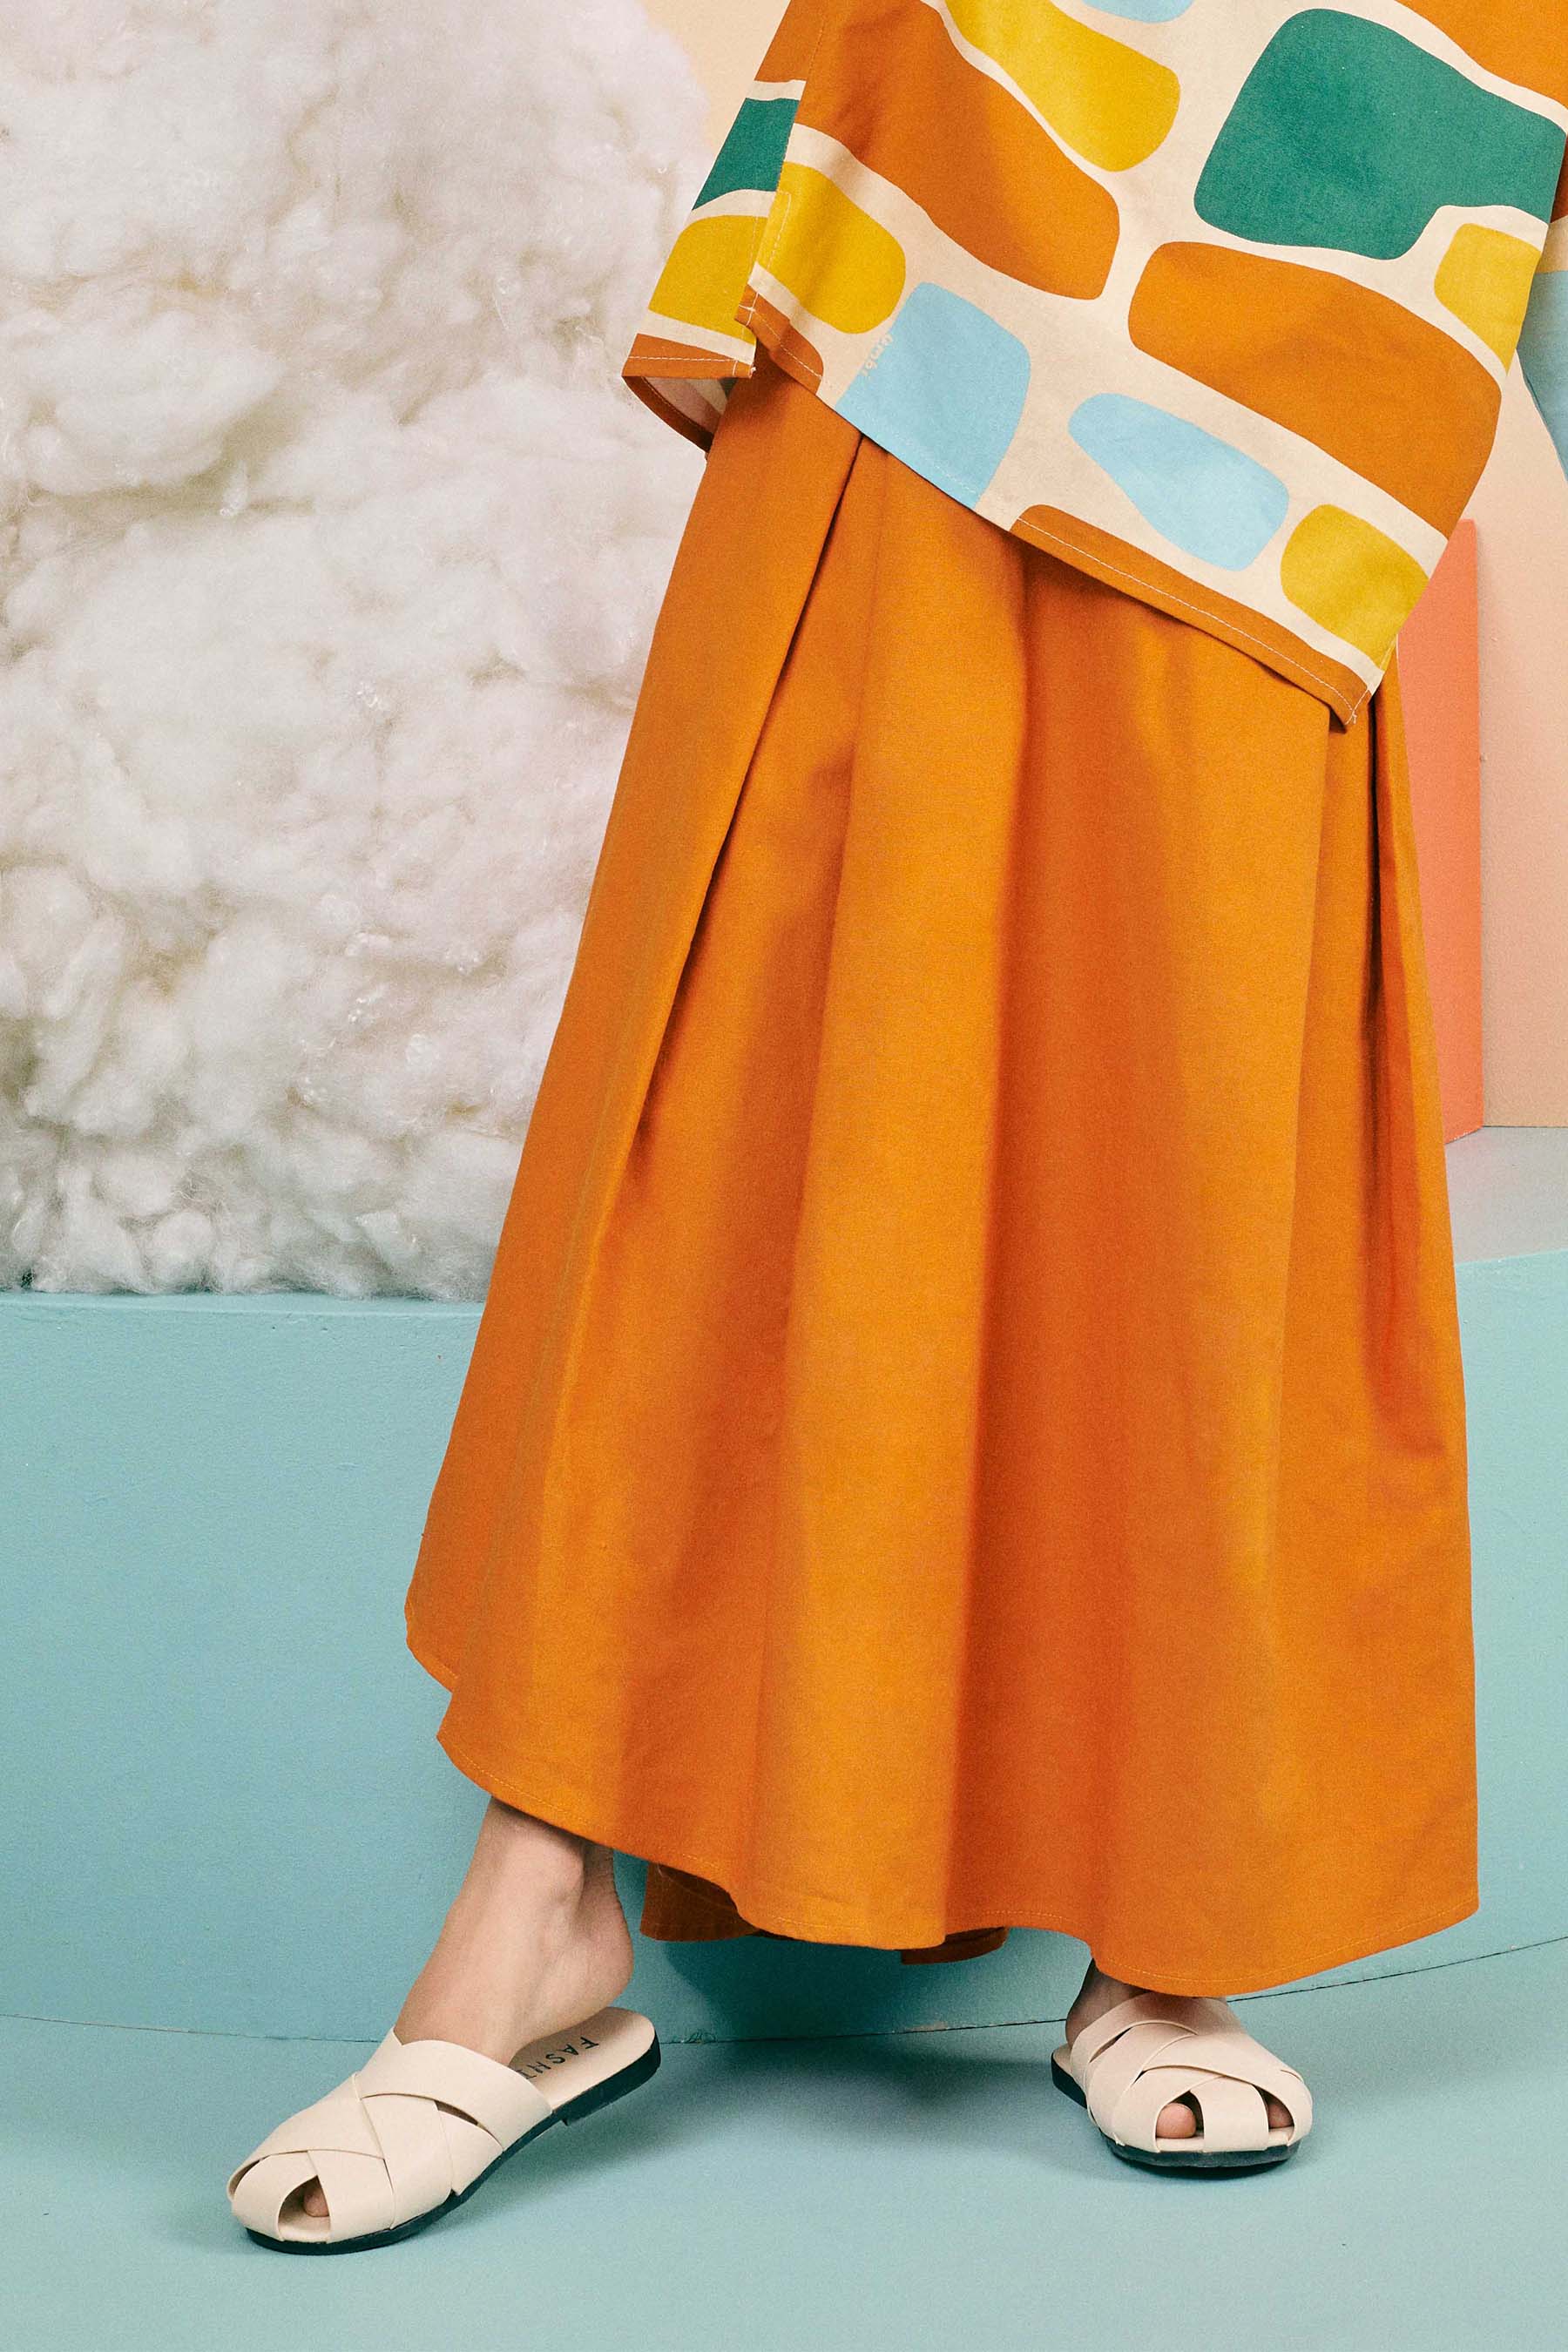 baju raya family sedondon kids girl teacup skirt orange